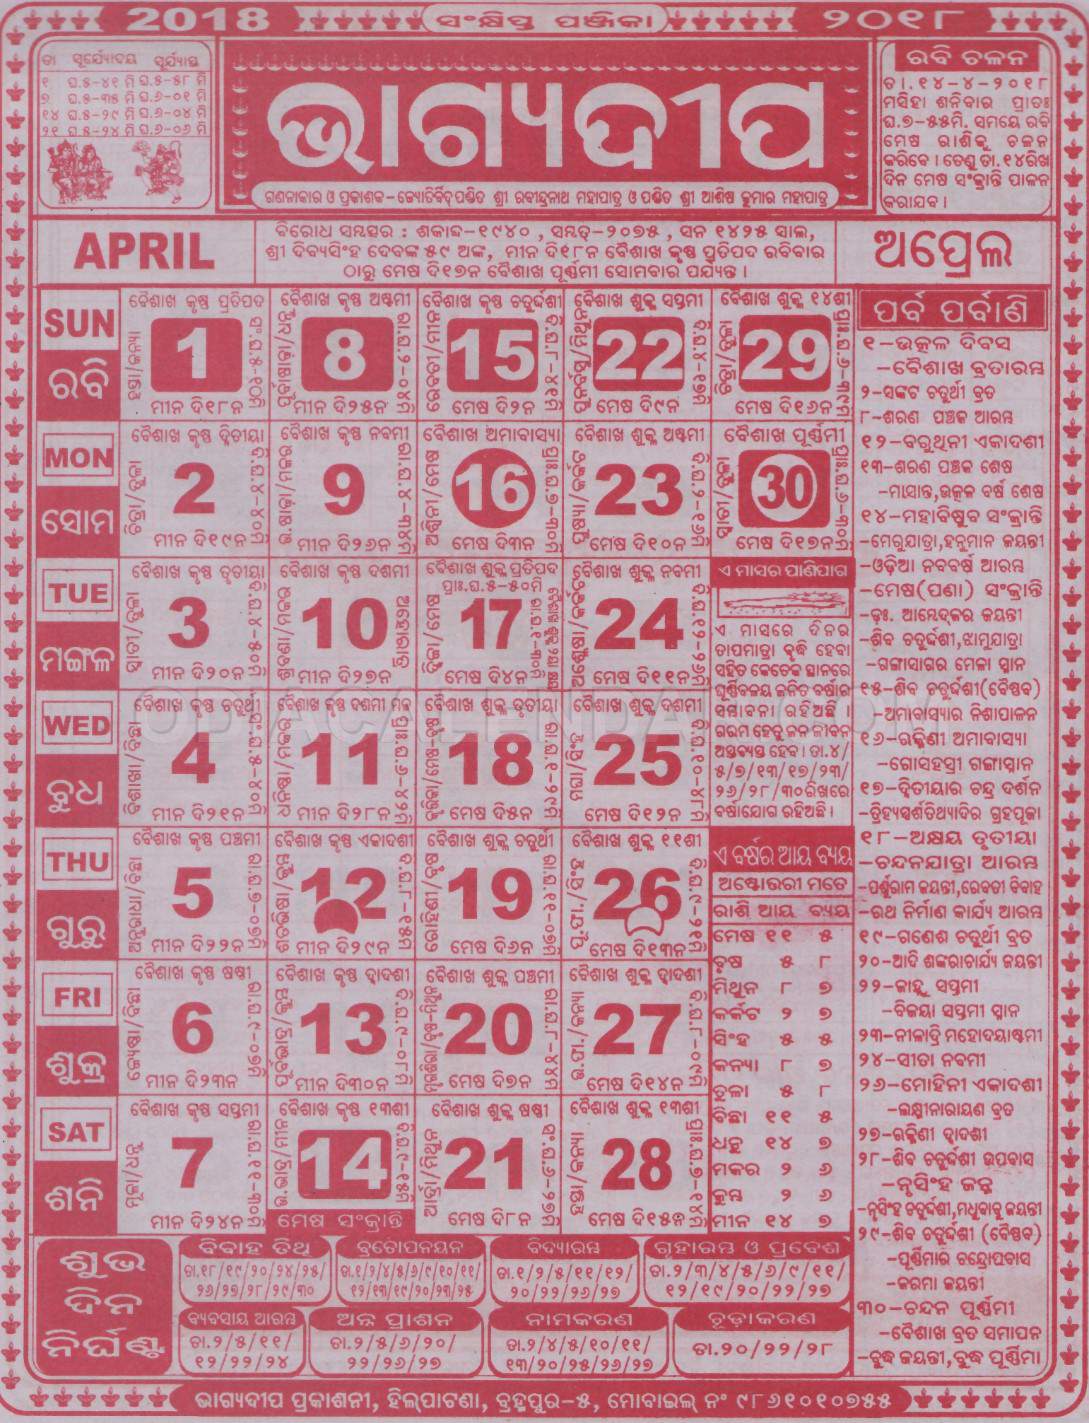 Bhagyadeep April 2018 Image